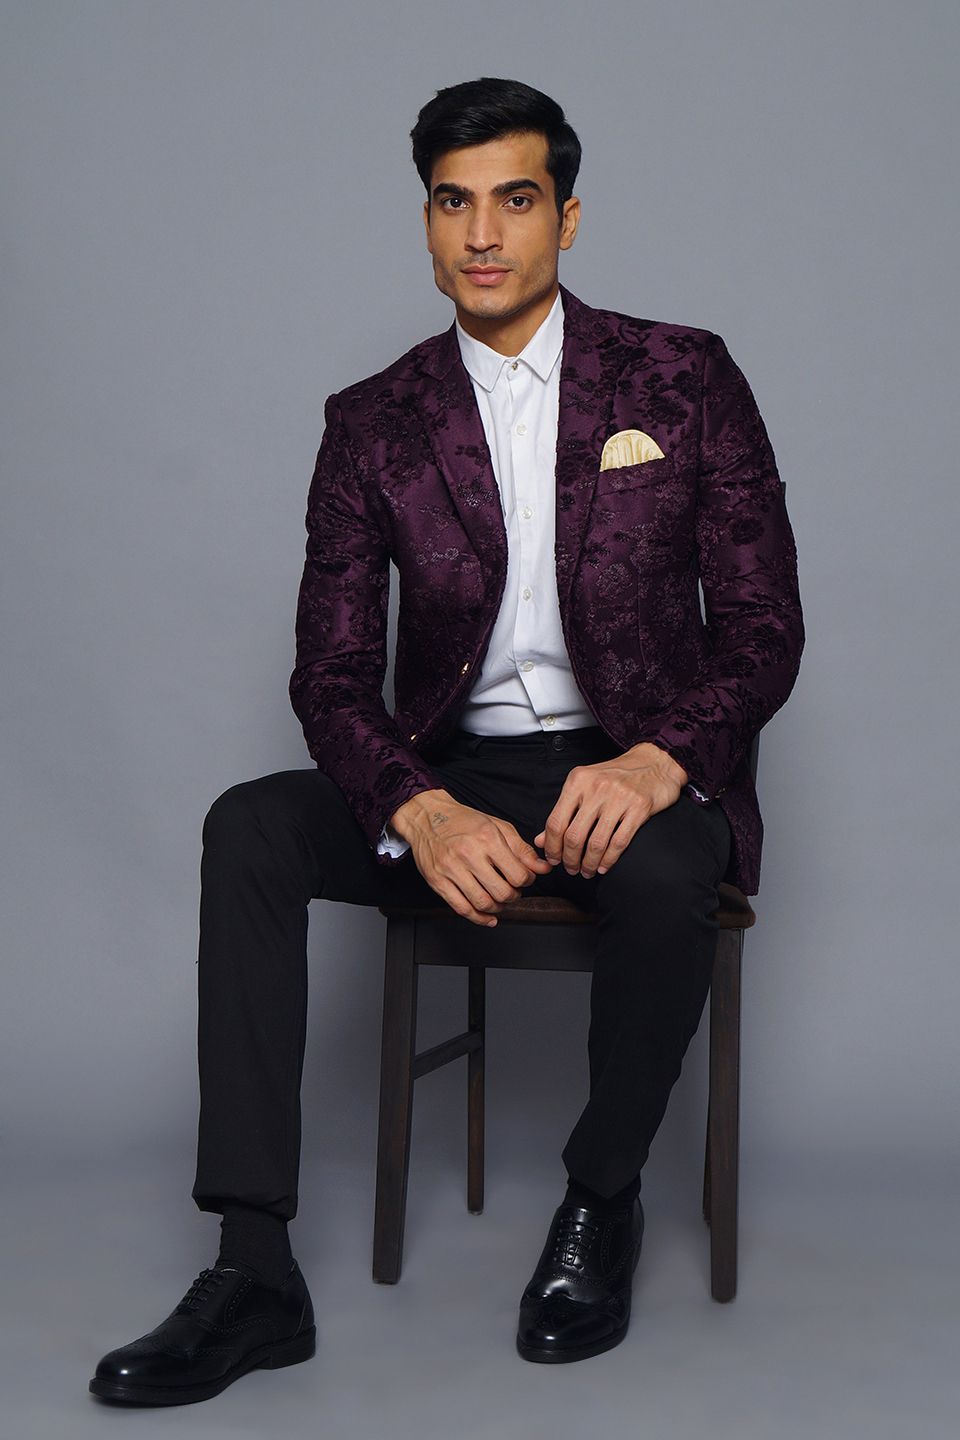 Wintage Men's Embroidered Velvet Coat Blazer Jacket: Purple Purple / 36 /X- Small